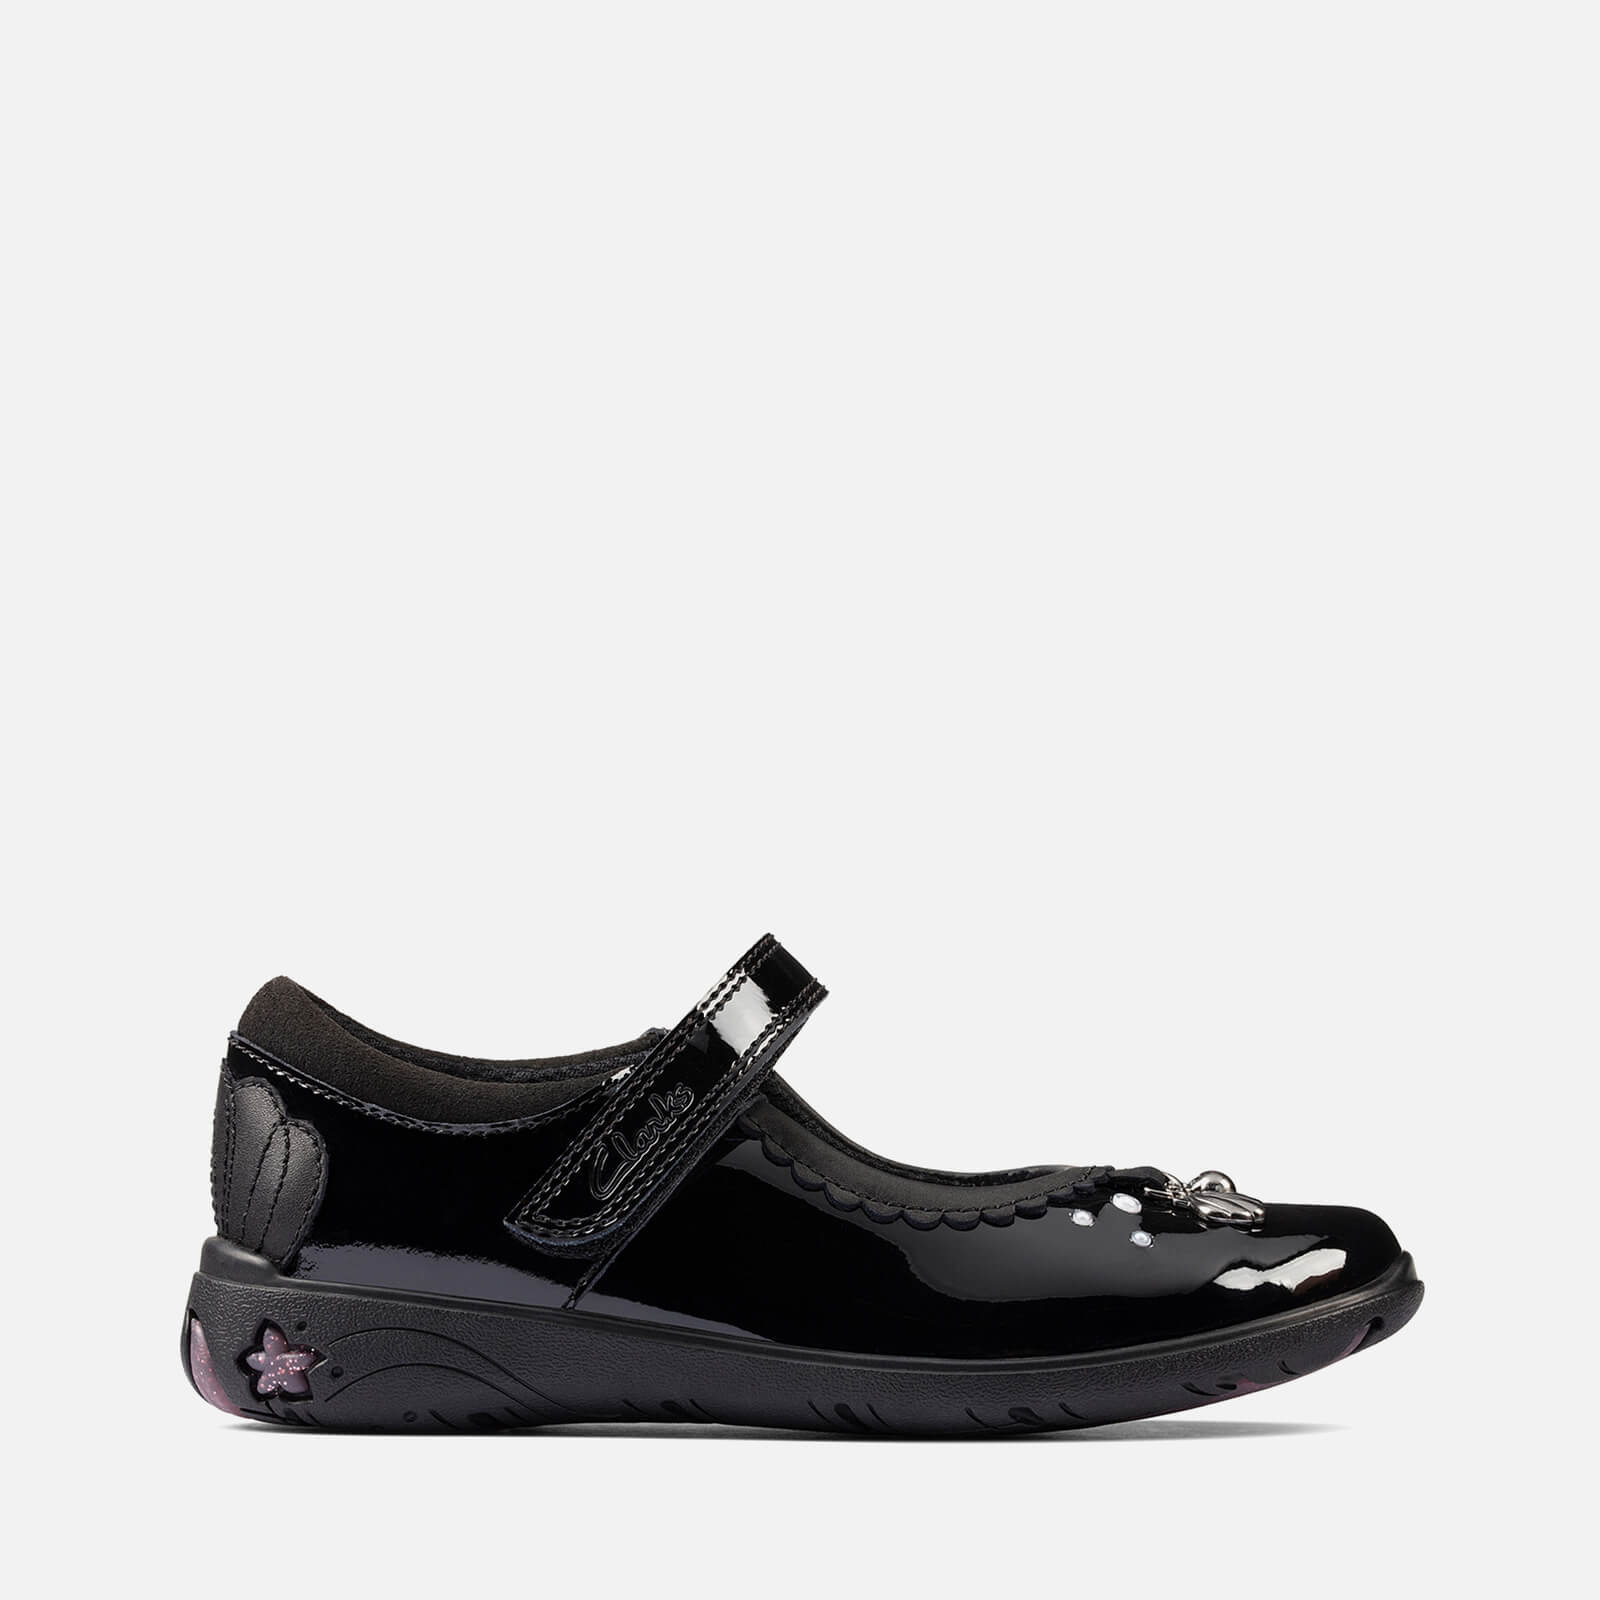 clarks kids' sea shimmer school shoes - black patent - uk 12 kids